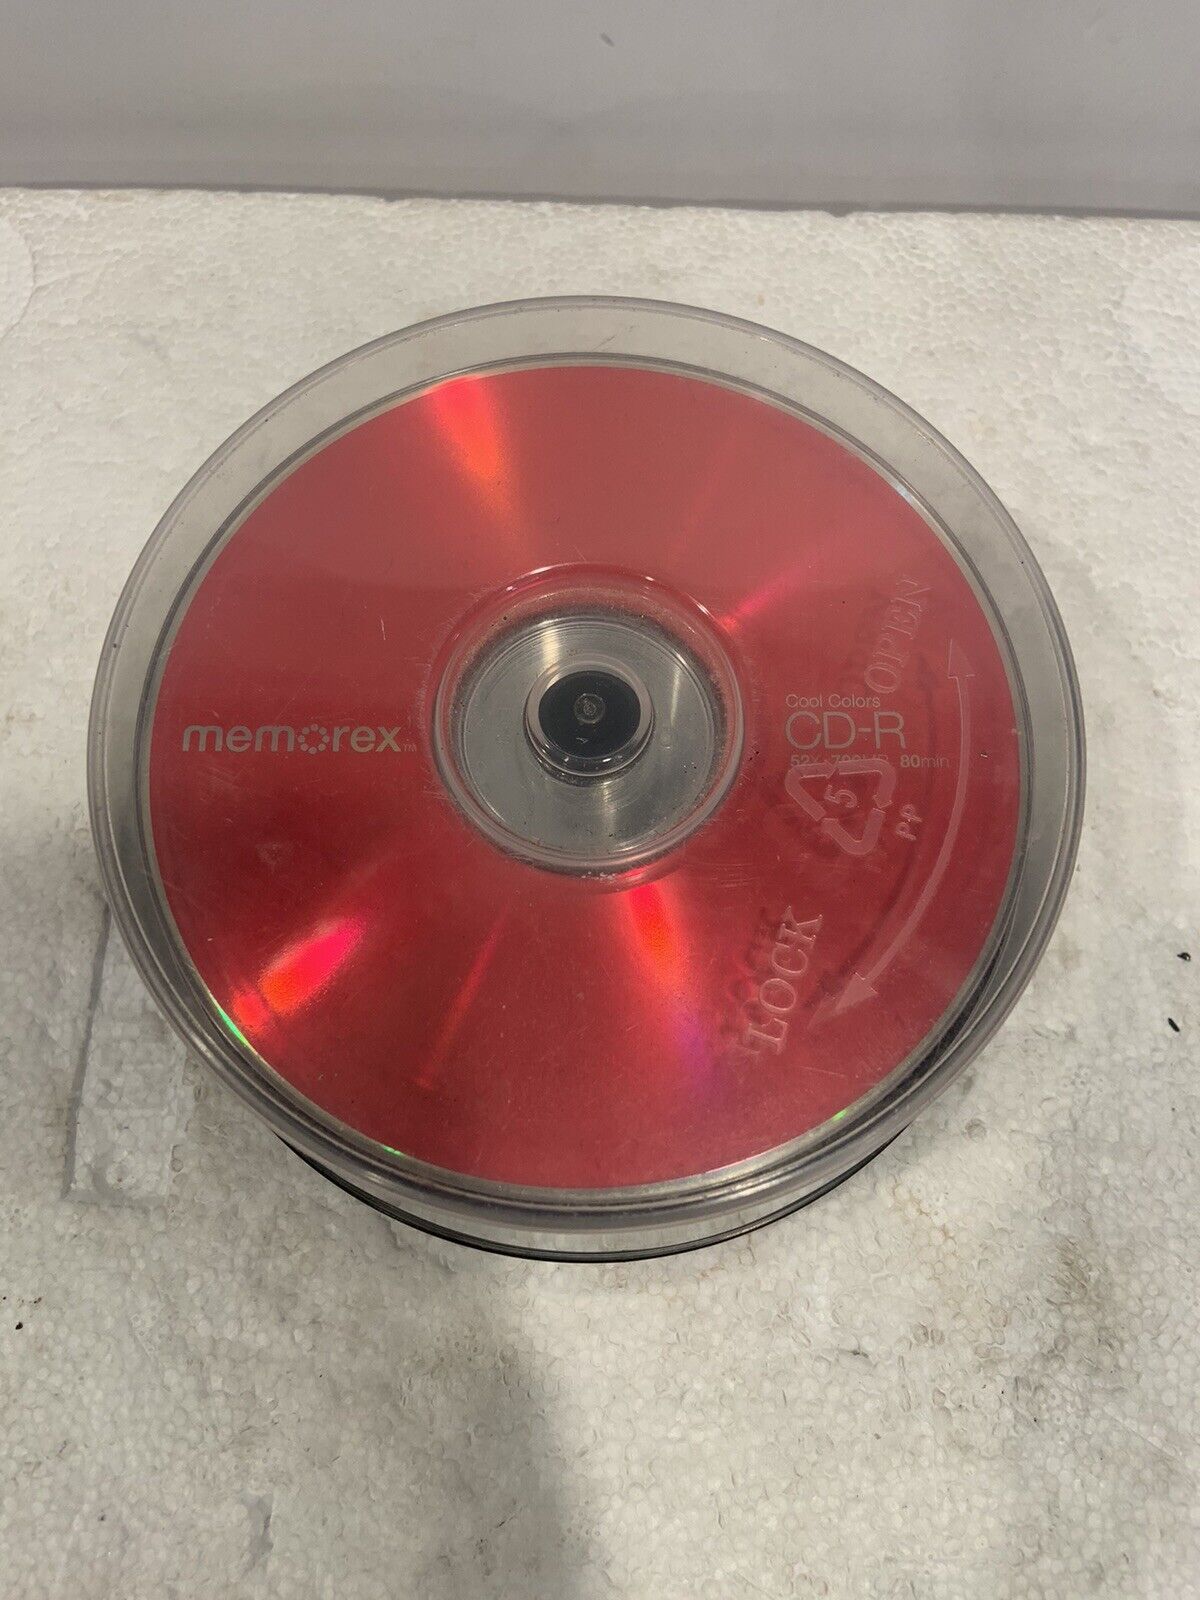 25 Memorx 10 CD-R 52X 700MB 80min NEW Recordable CD-R Media Cool Colors NICE